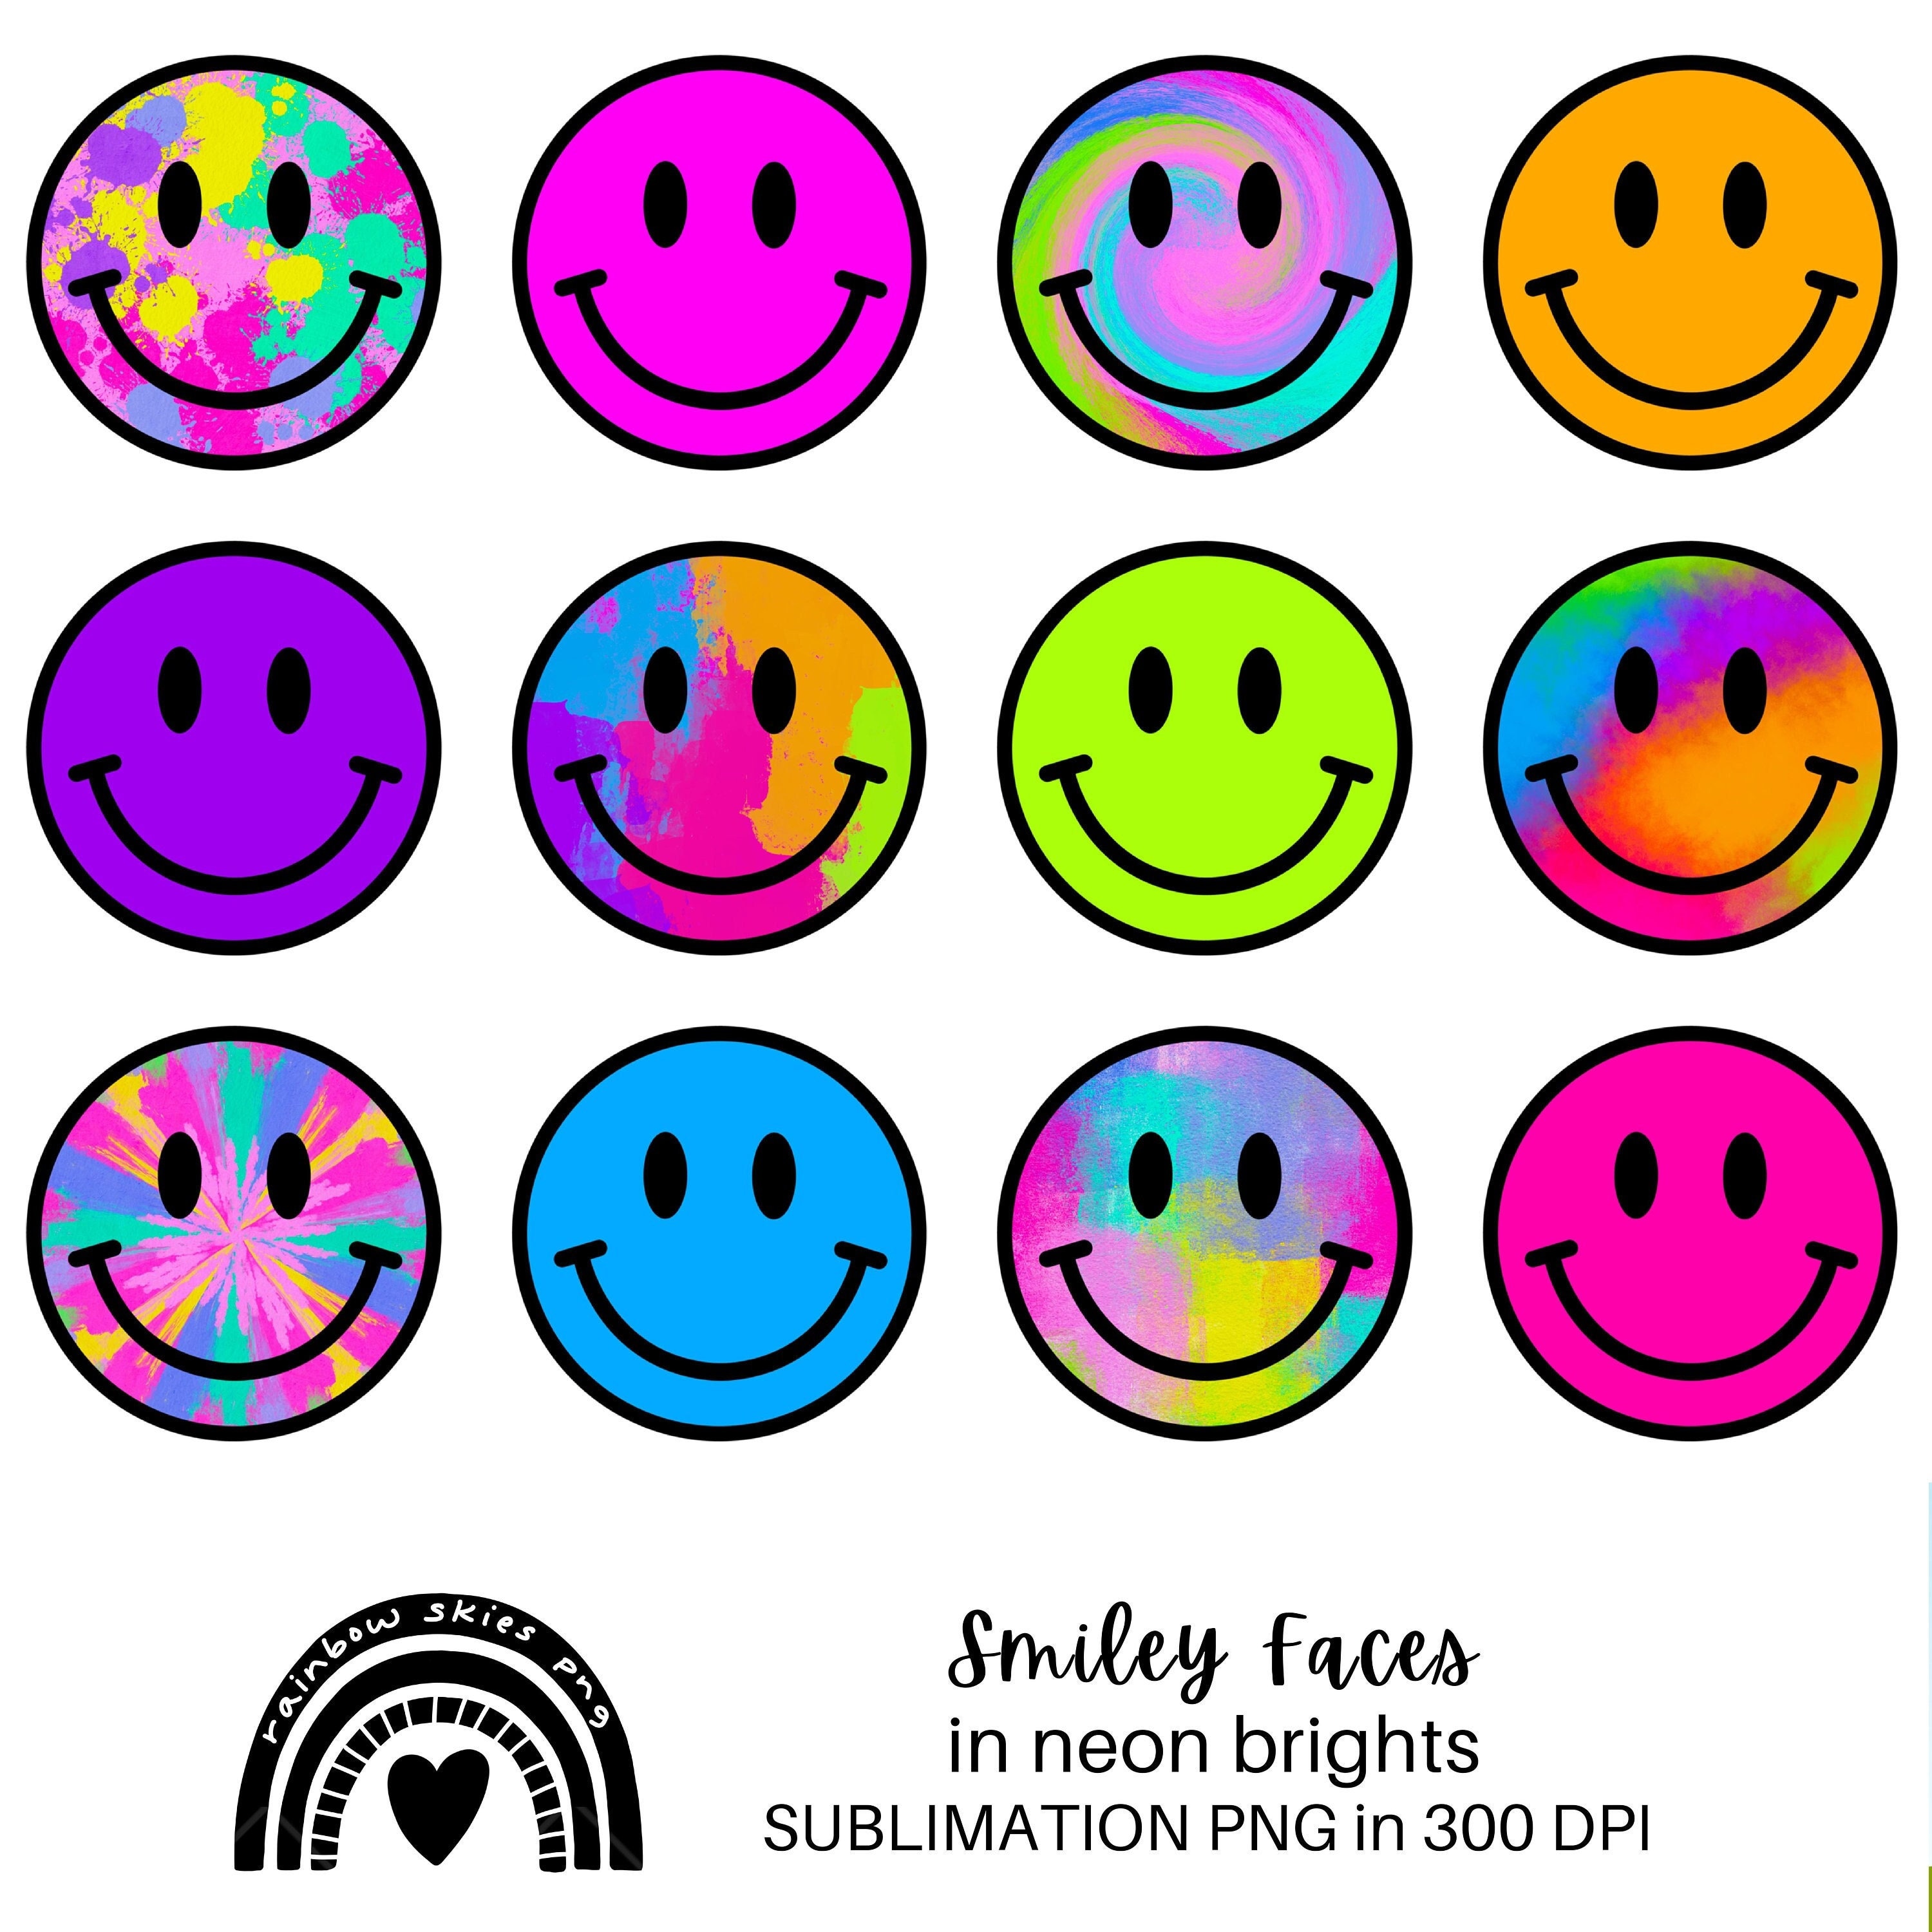 Rainbow Smiley Face LGBTQ Pride Smile Emoji Vinyl Sticker Decal